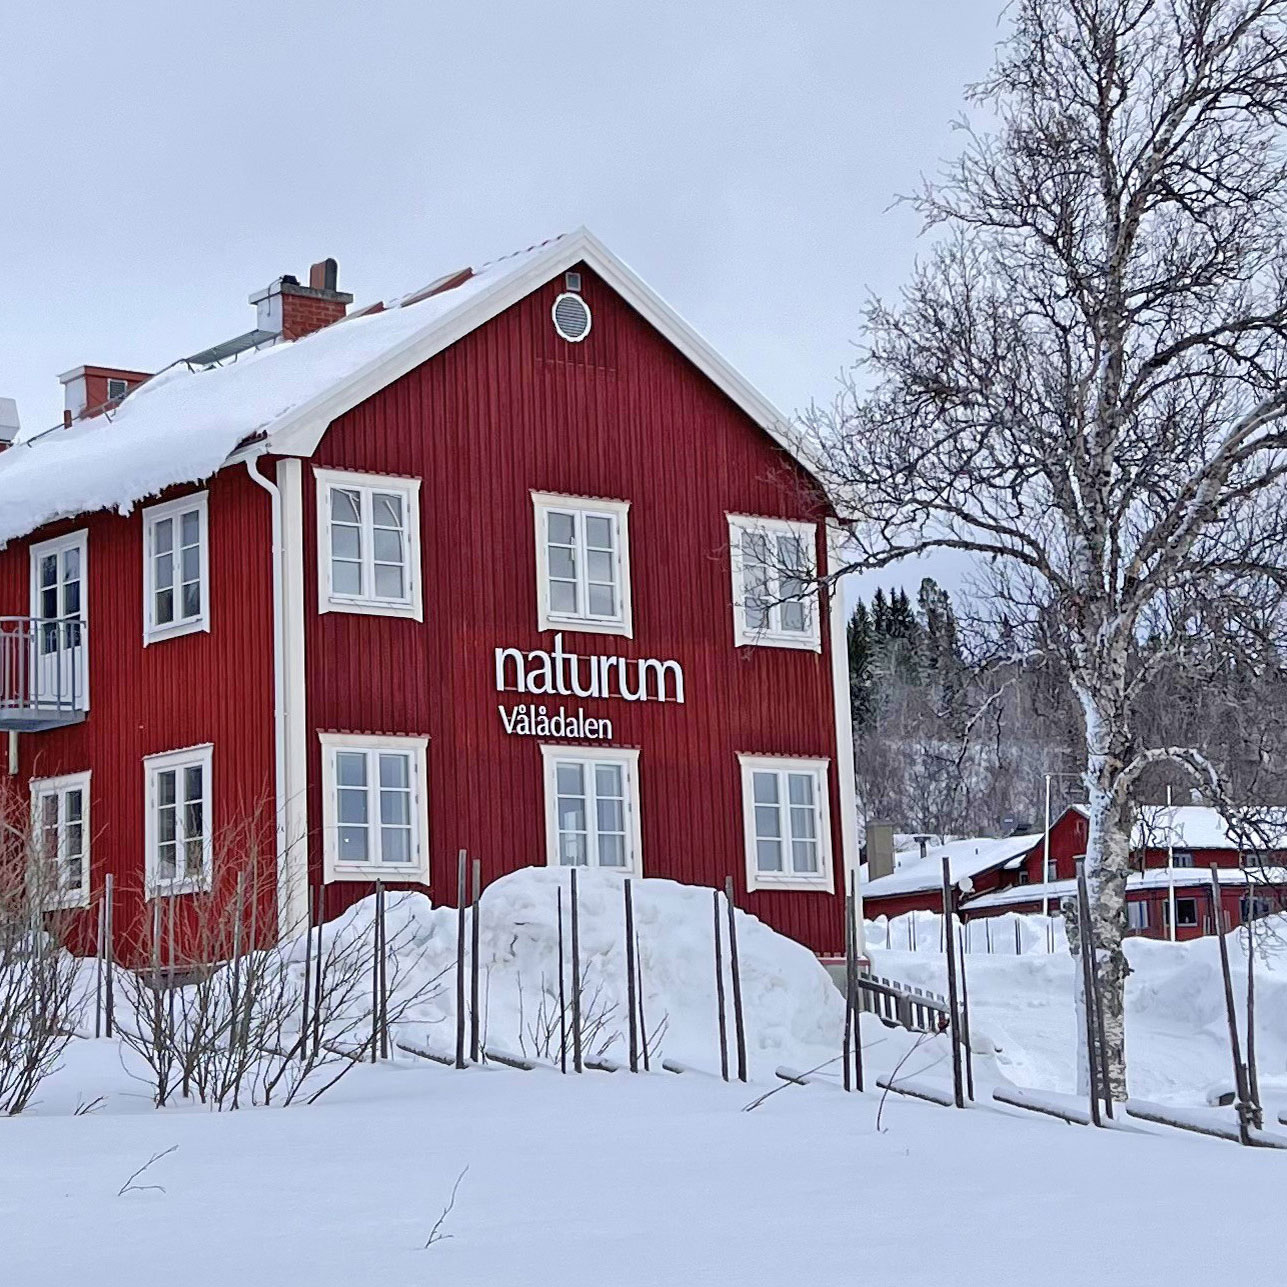 Naturumhuset inbäddat i snö